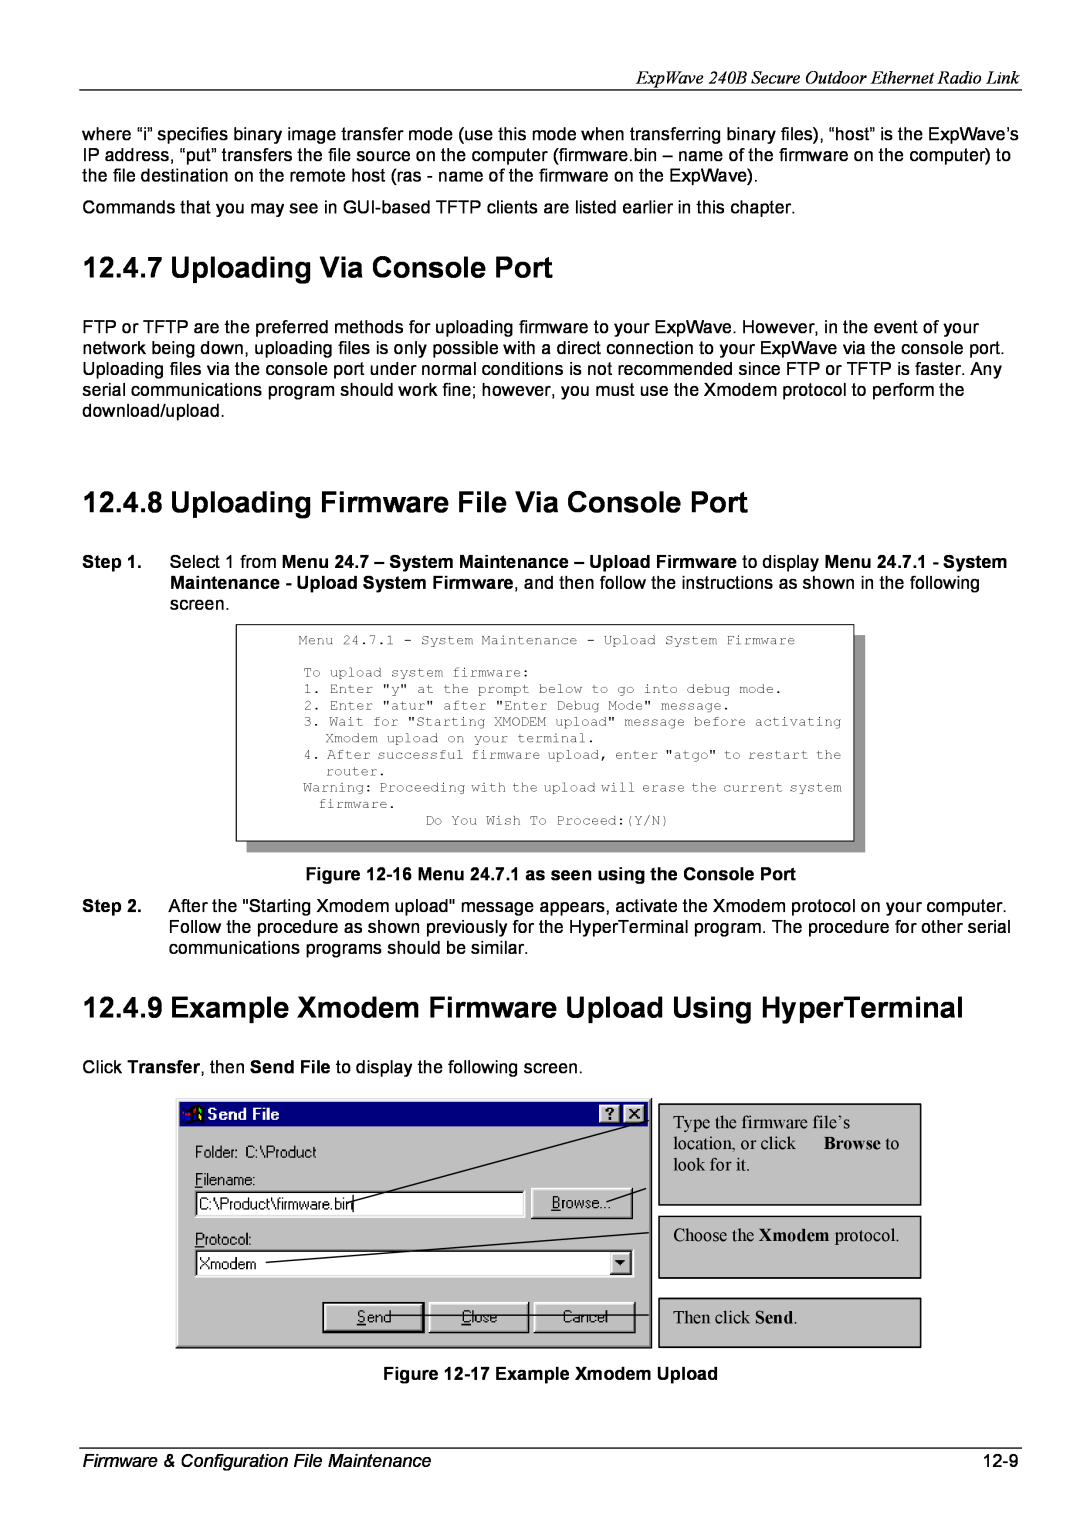 ZyXEL Communications 240B Uploading Via Console Port, Uploading Firmware File Via Console Port, 17 Example Xmodem Upload 